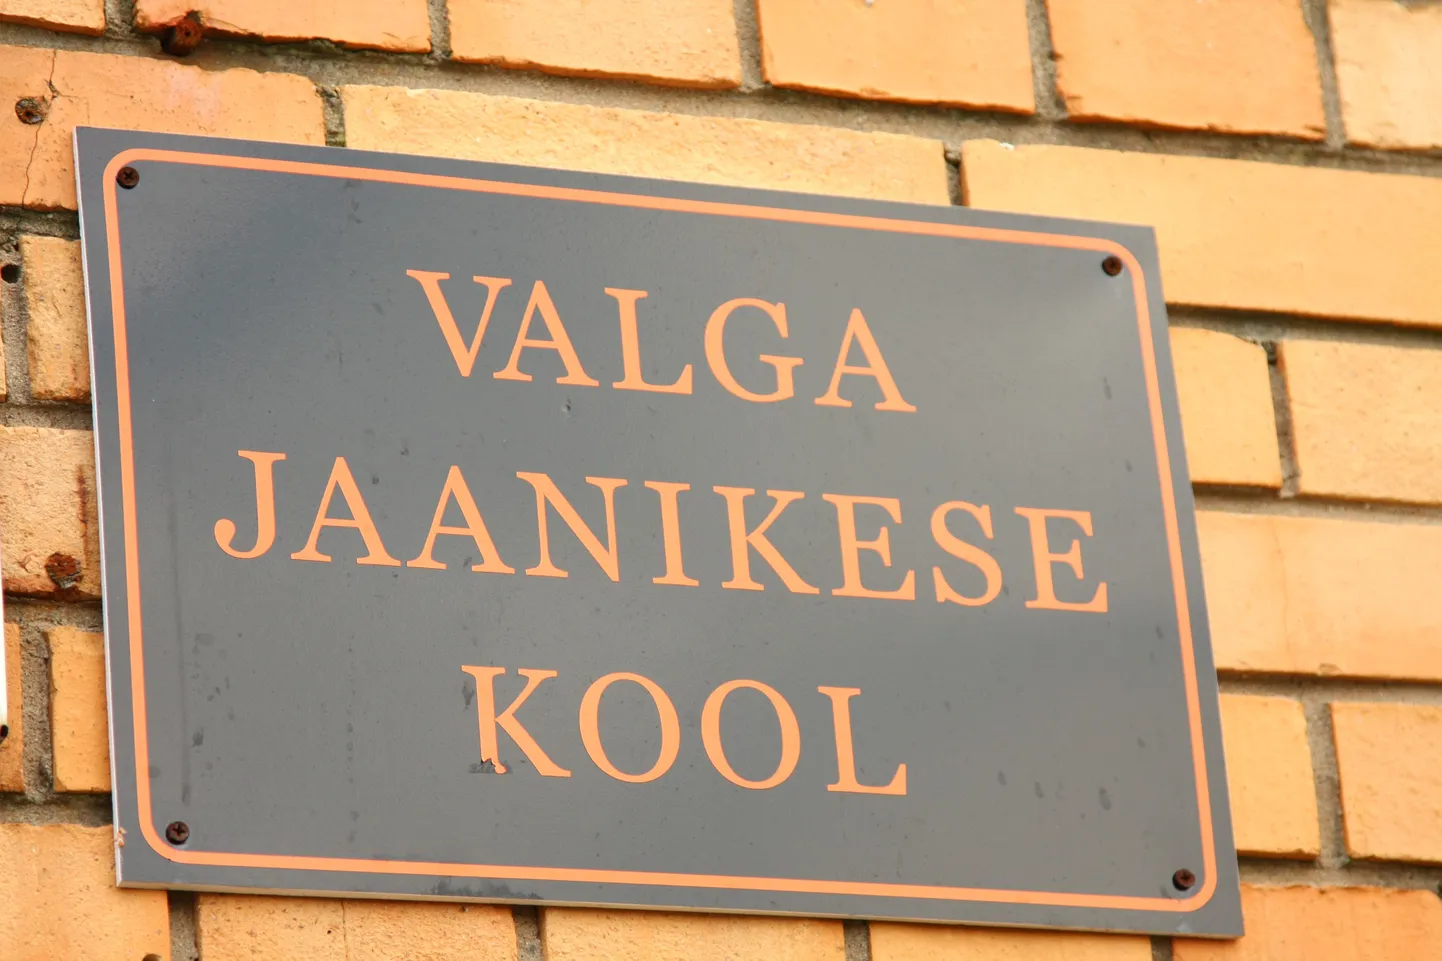 Valga Jaanikese kool